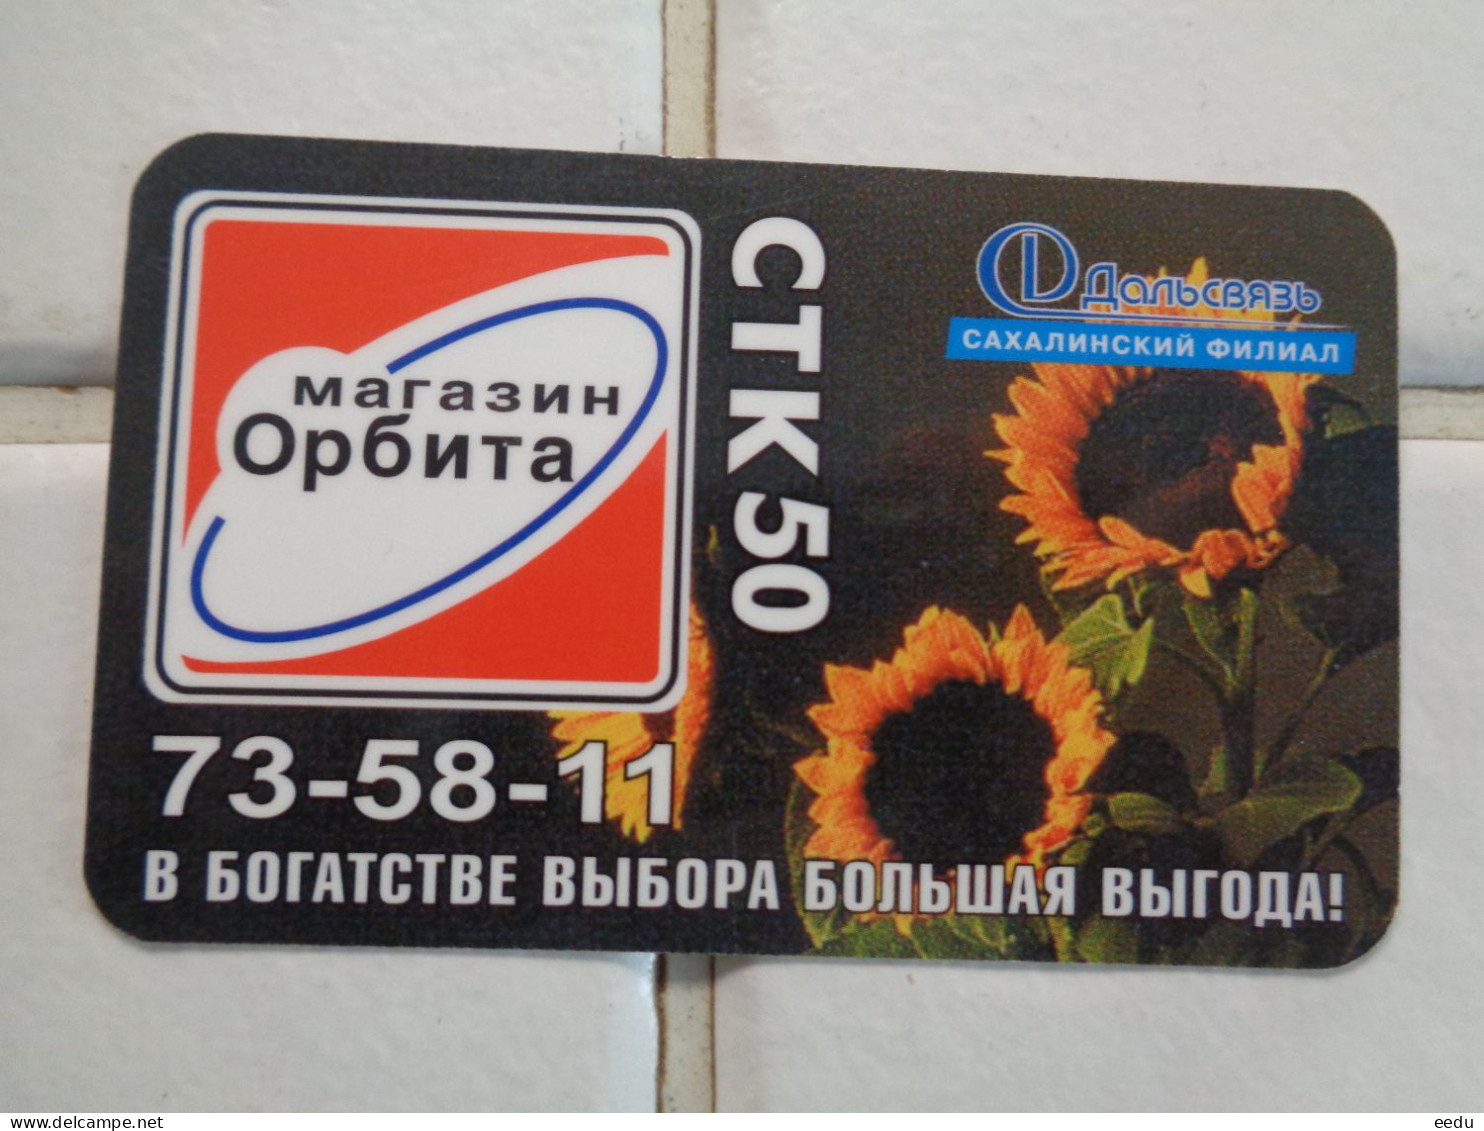 Russia Phonecard - Russland